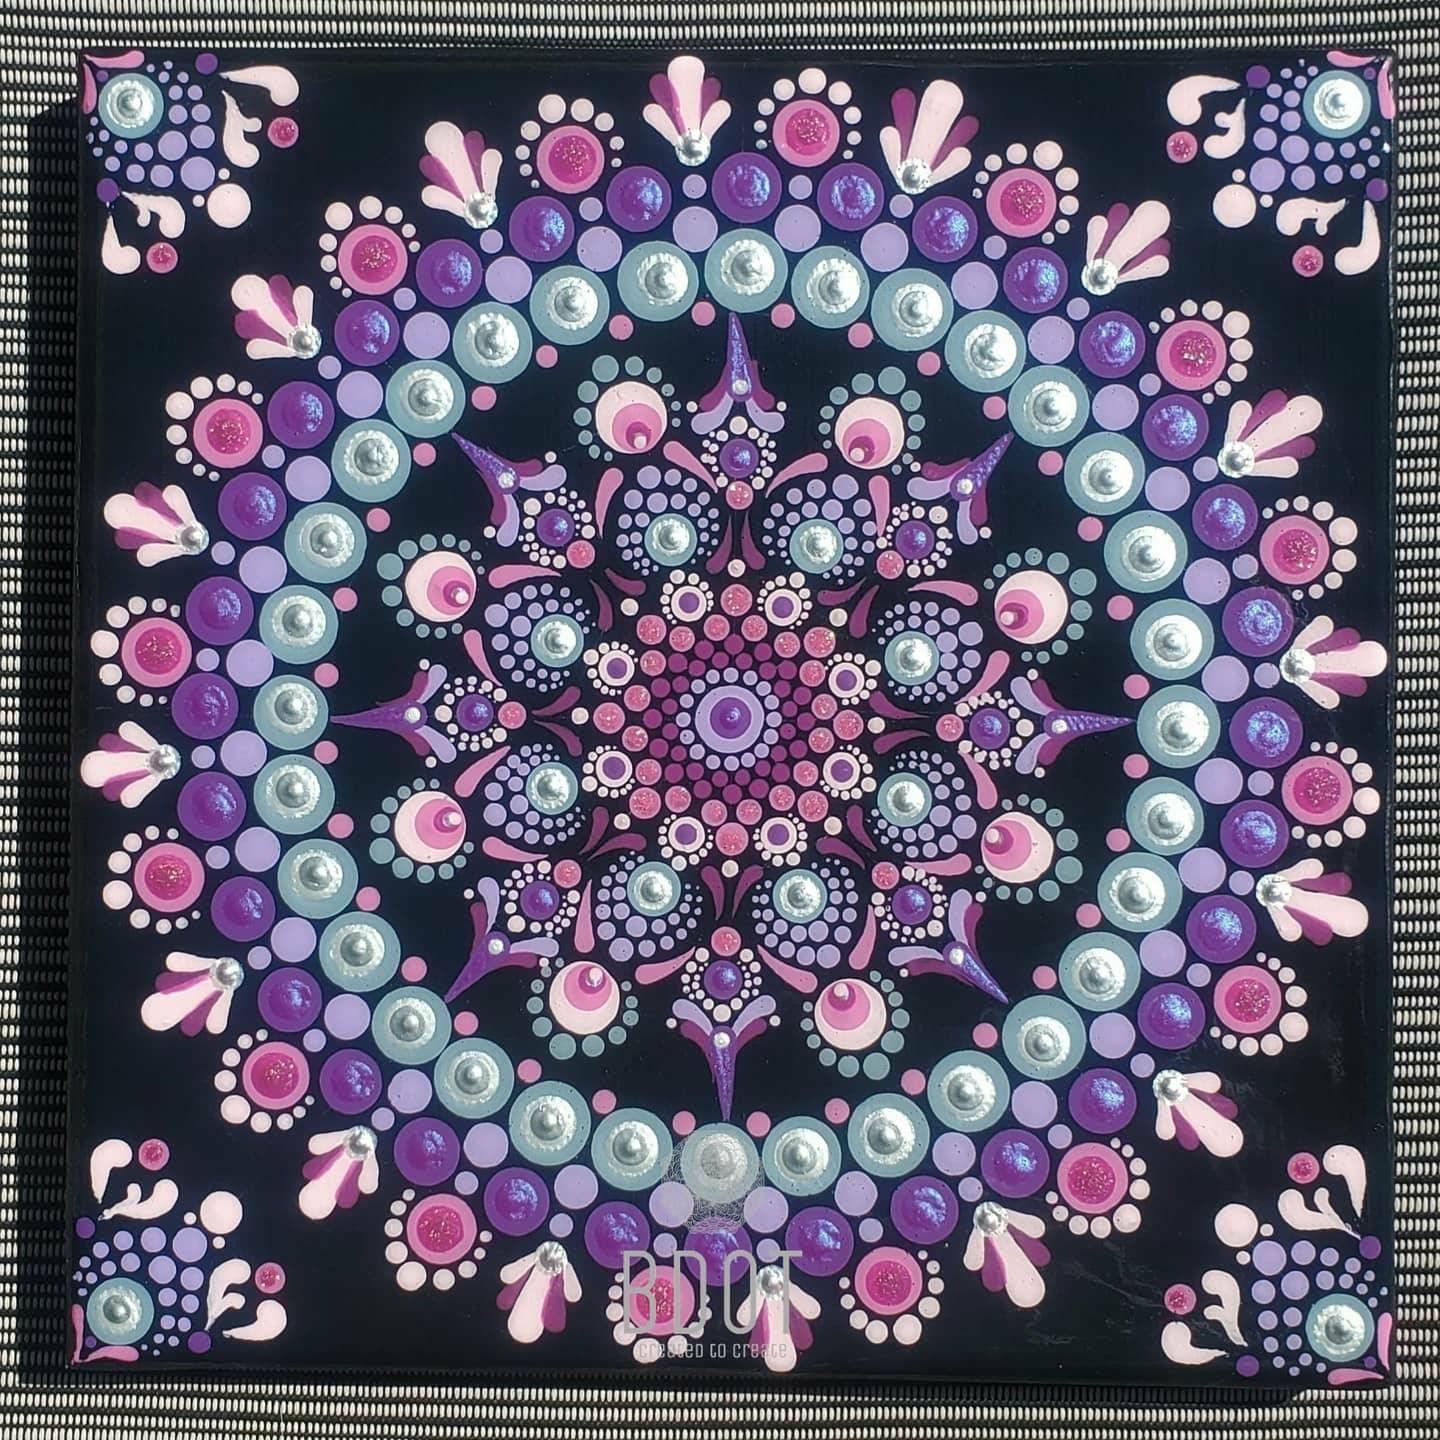 Custom Painting | Your Own Unique Mandala